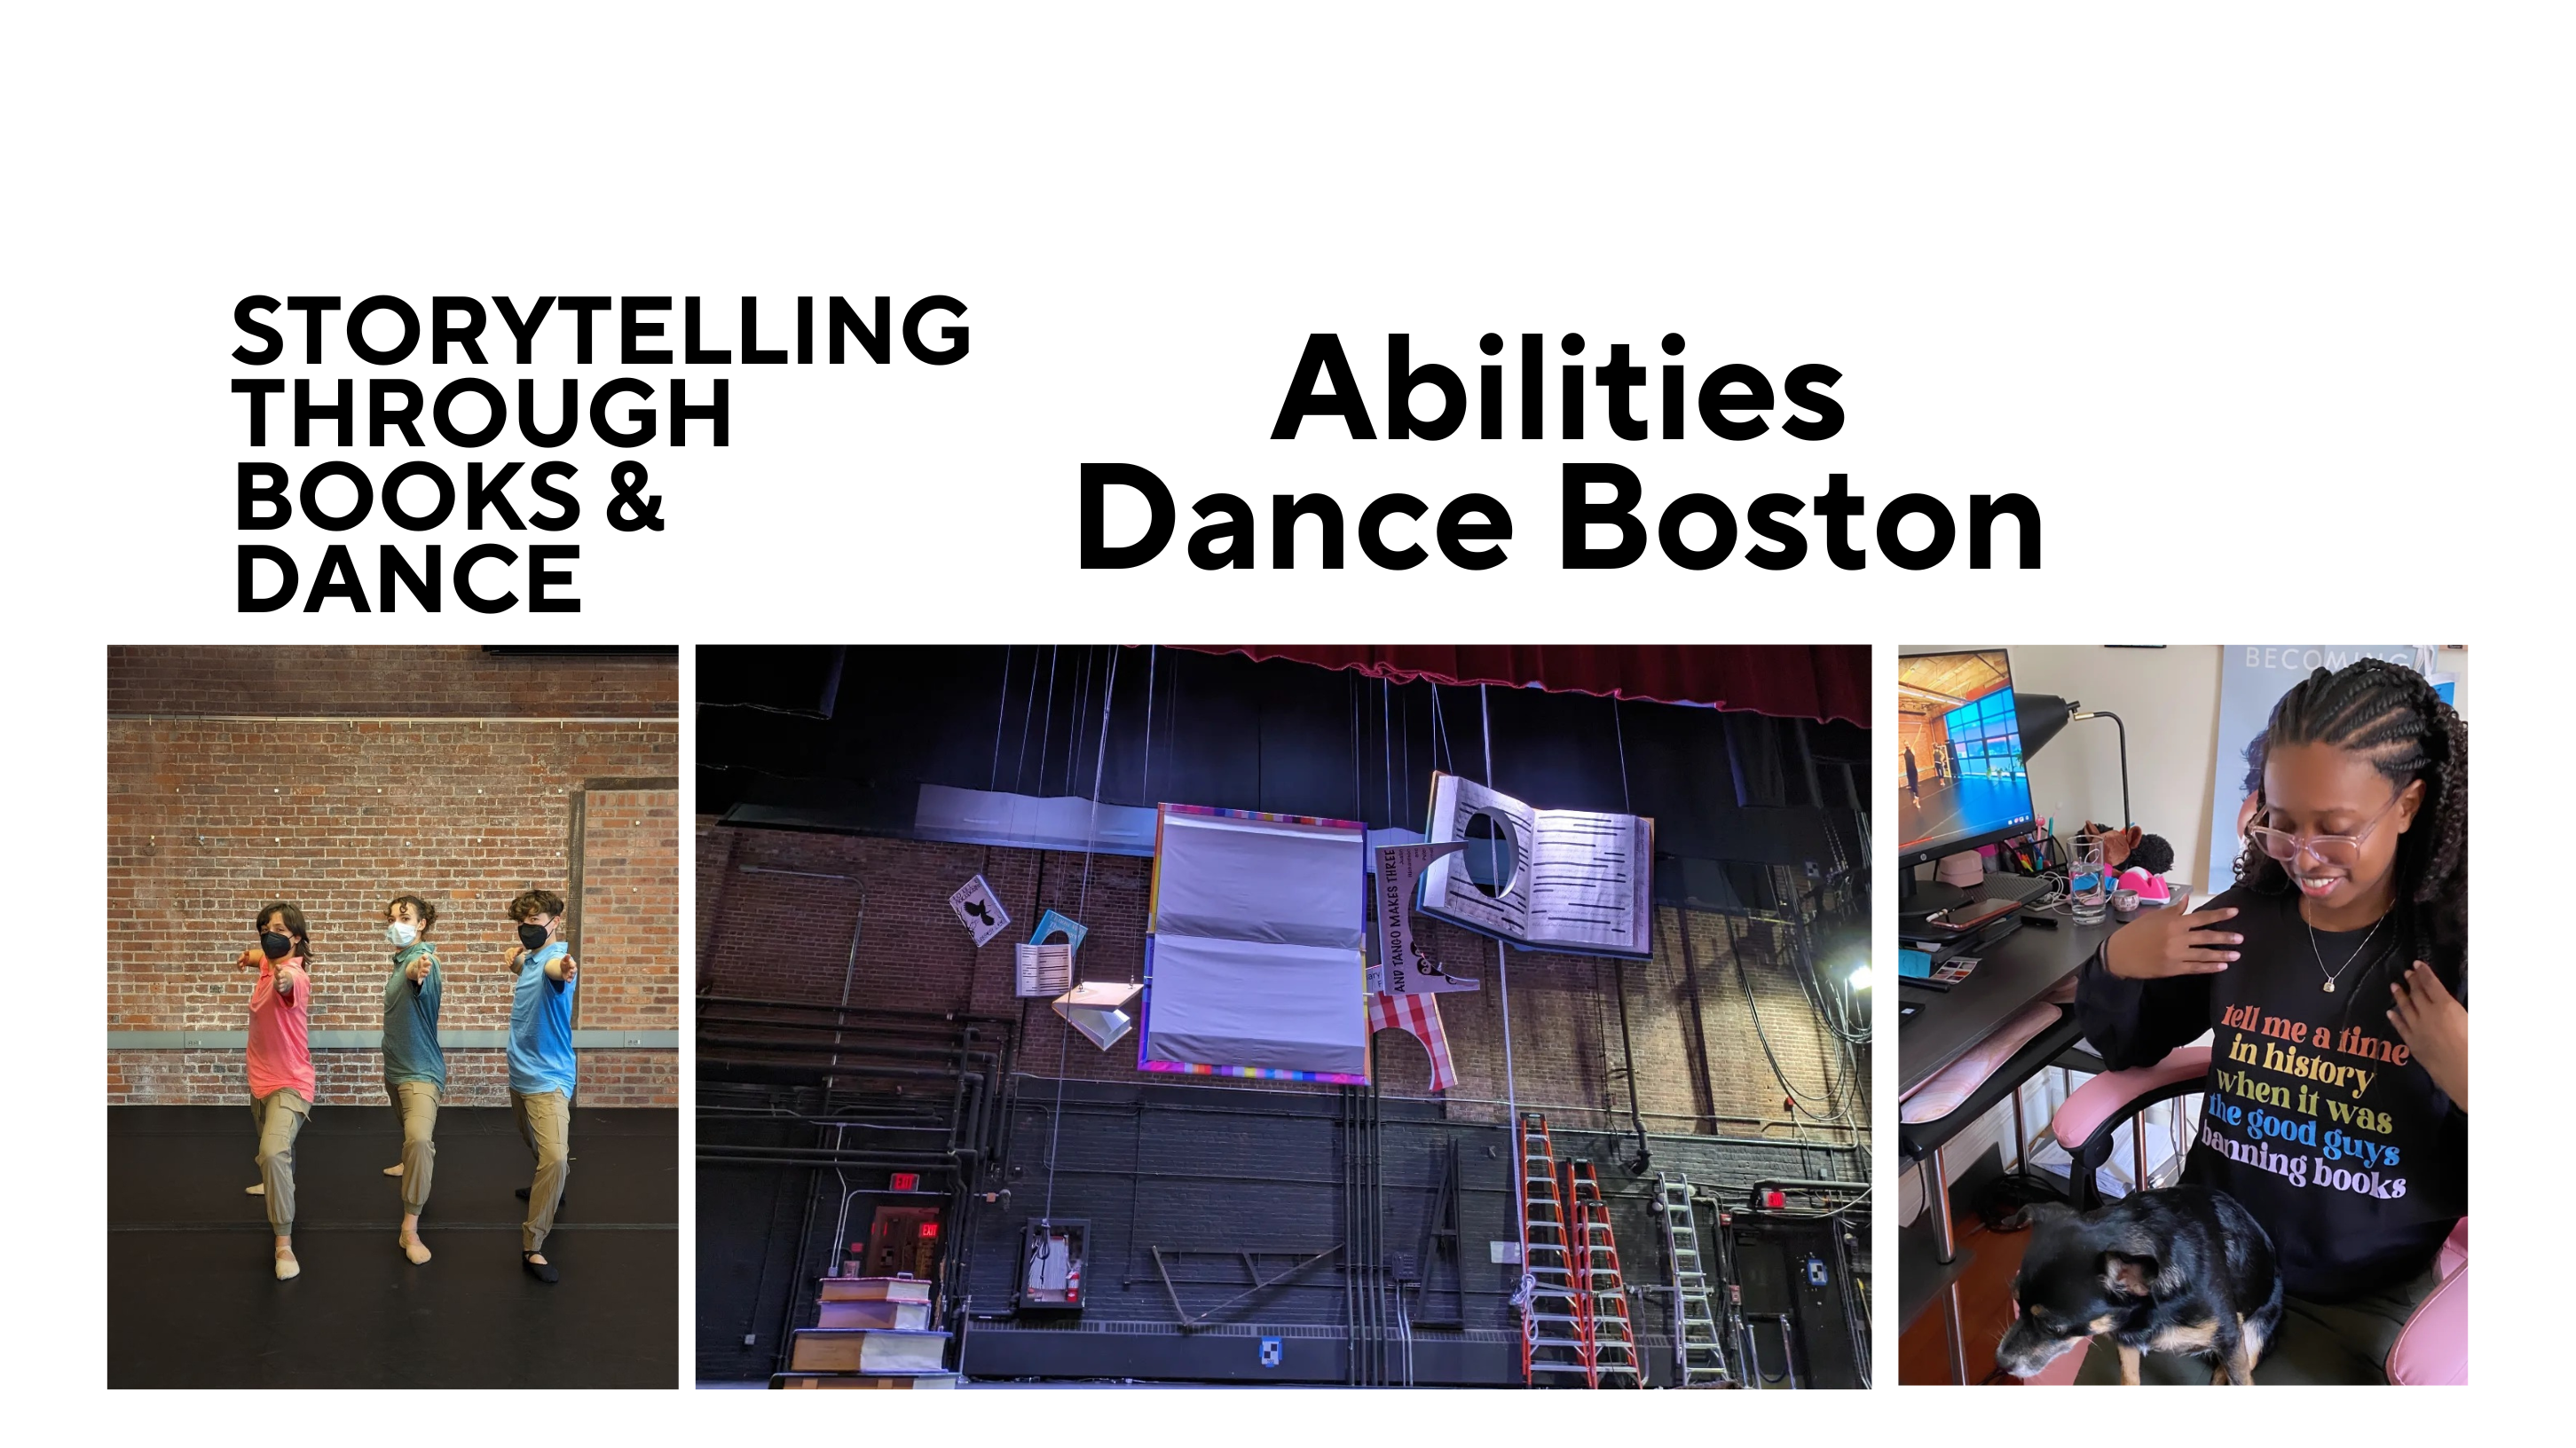 Dance Abilities Boston